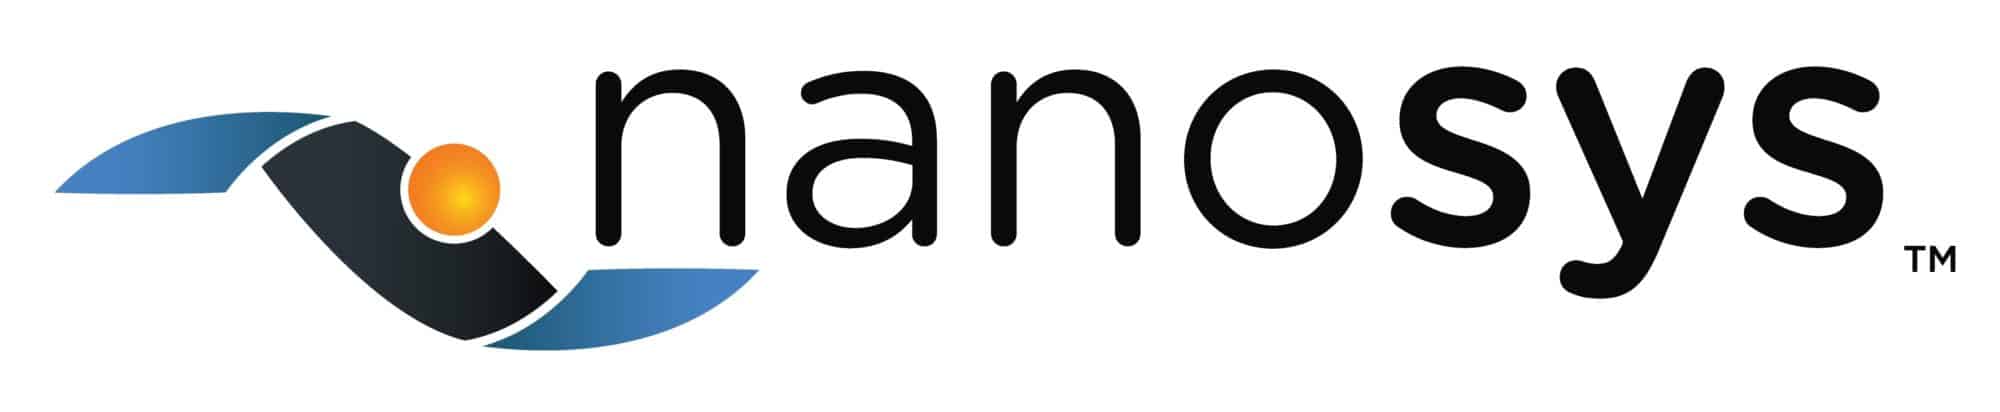 Nanosys logo